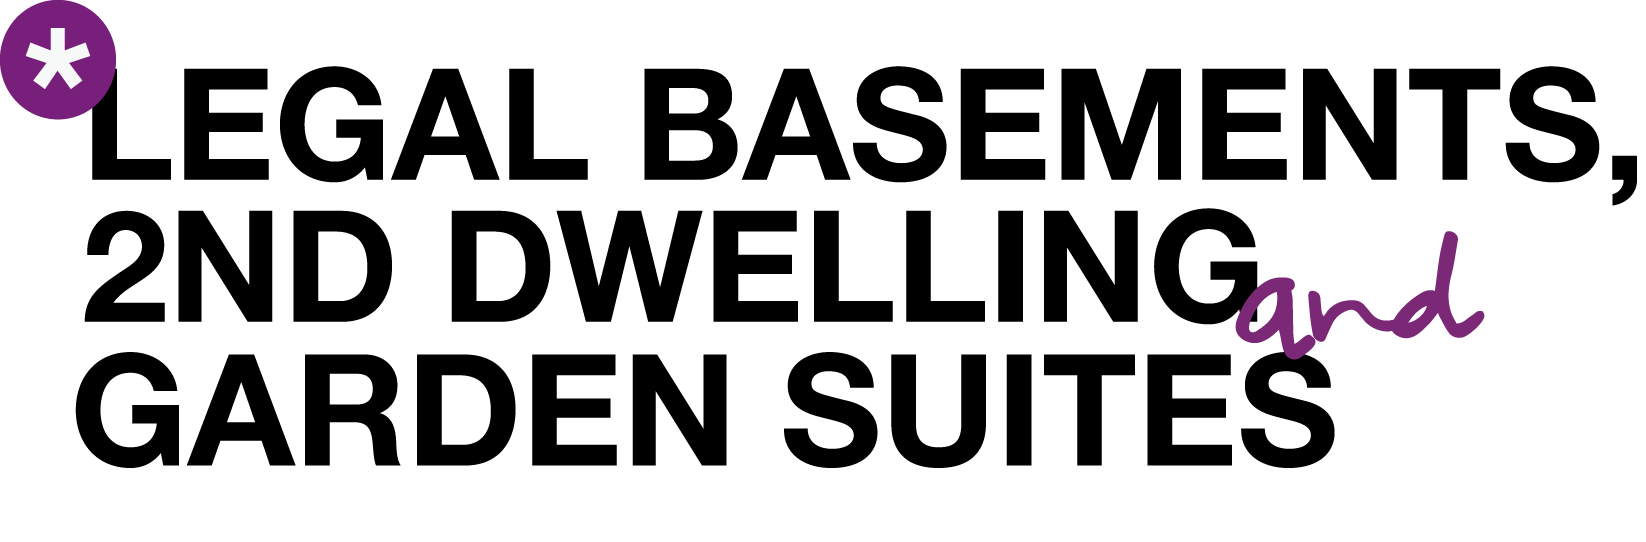 Legal Basements 2nd Dwelling Garden Suites Logo